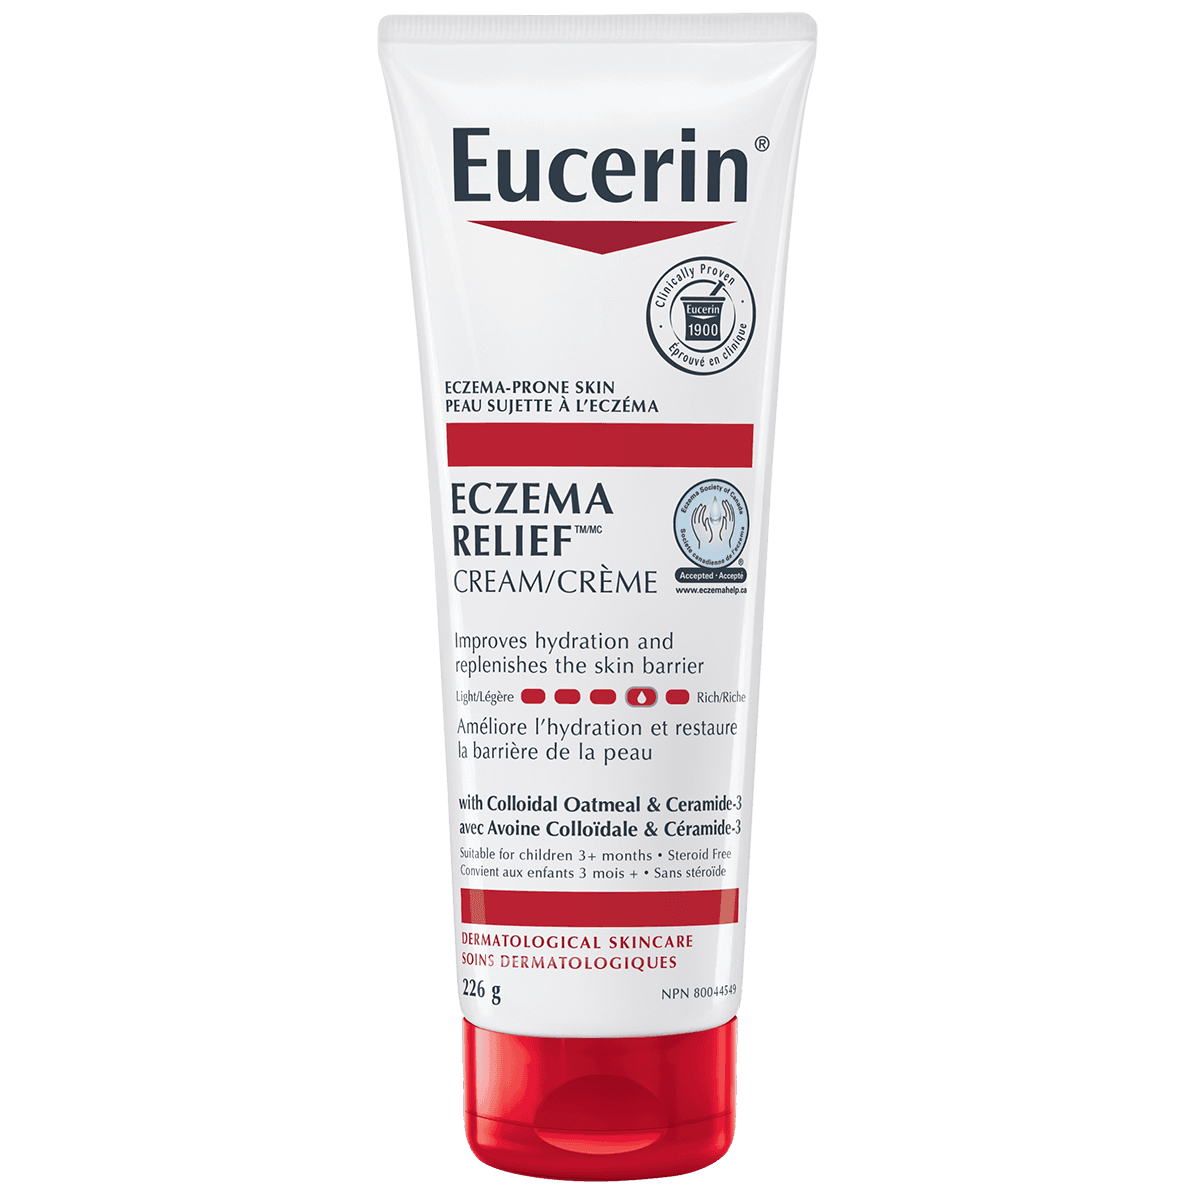 Image of Eucerin Eczema Relief Cream packshot.